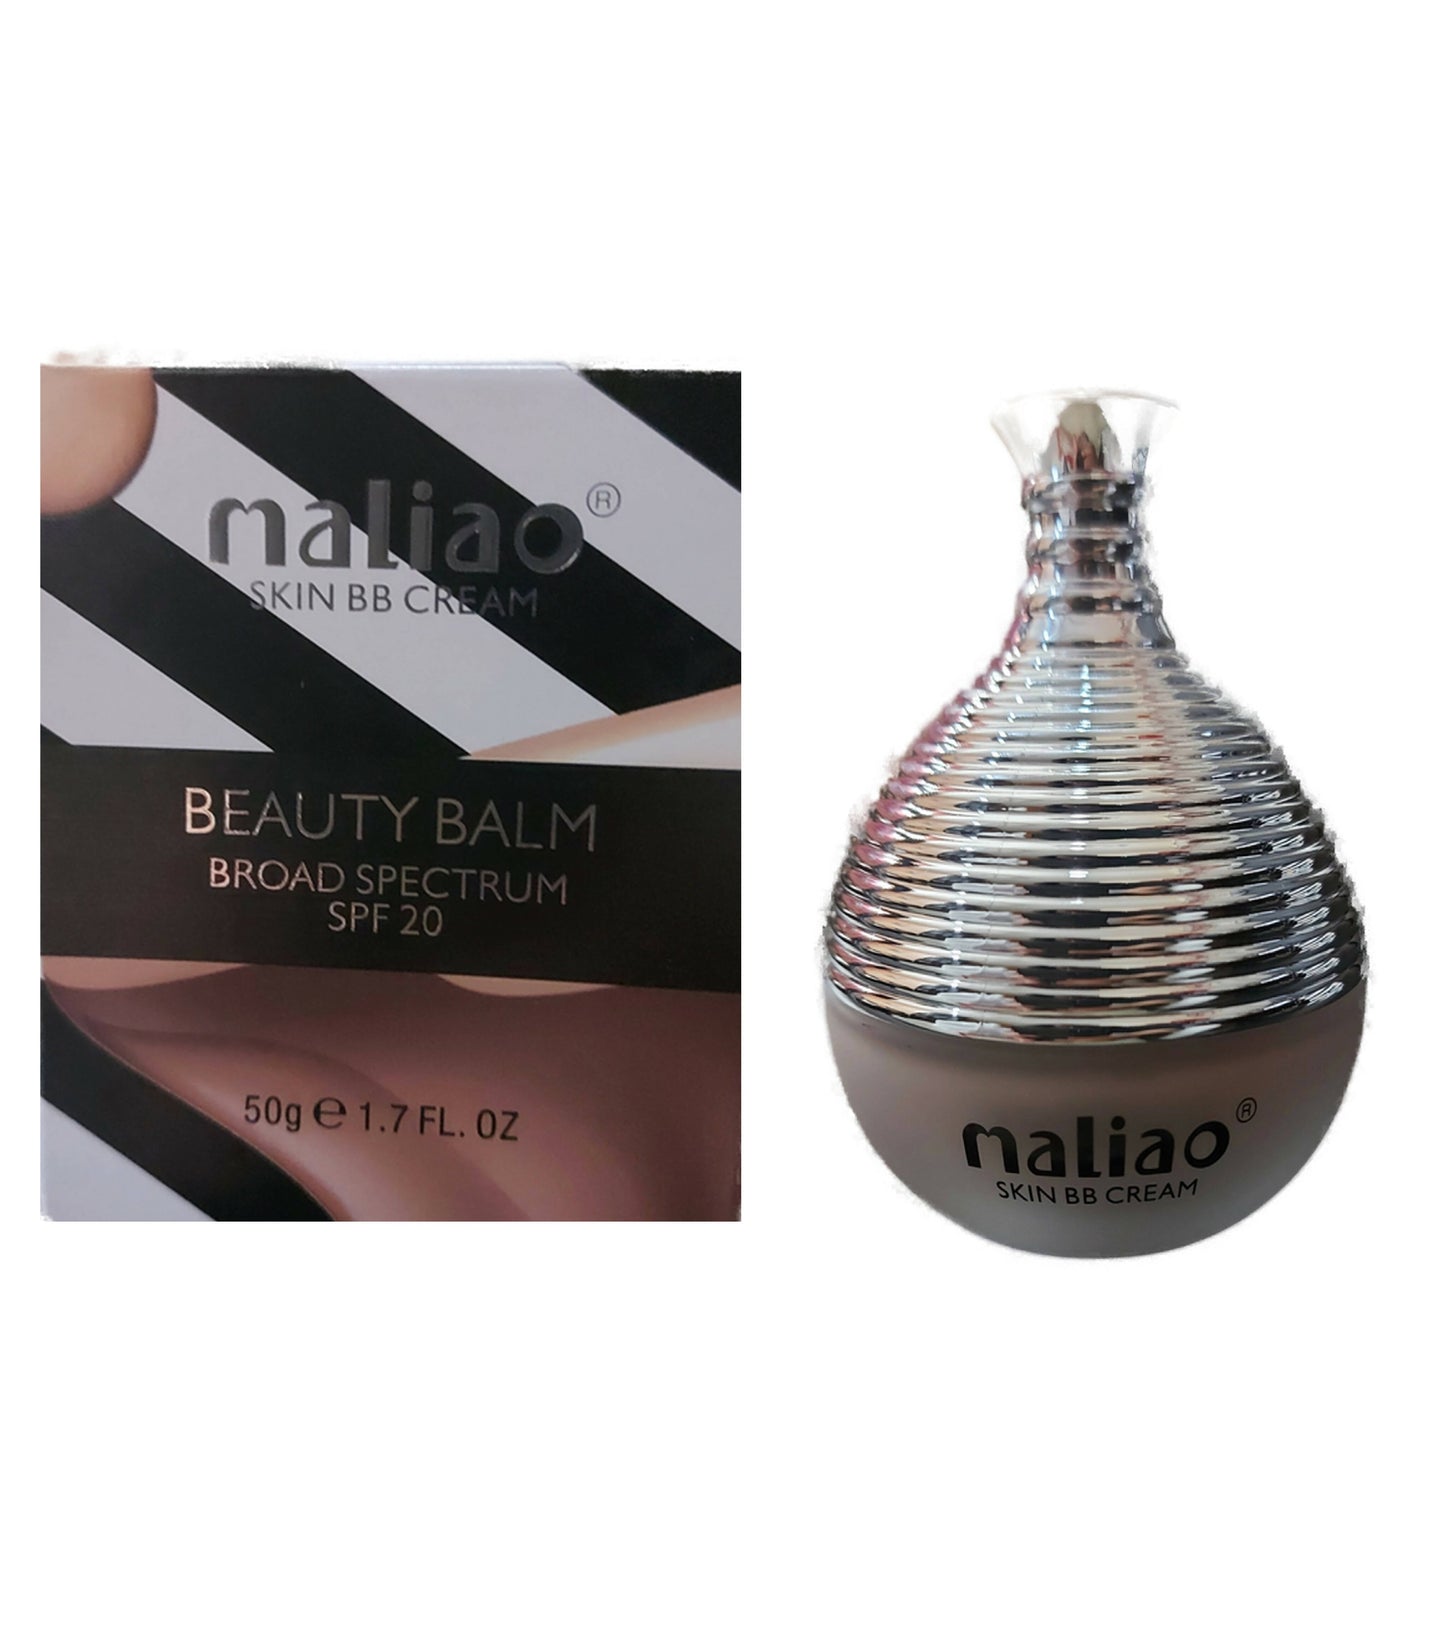 Maliao Skin Beauty Balm Broad Spectrum Foundation With SPF 20 - BUDNE